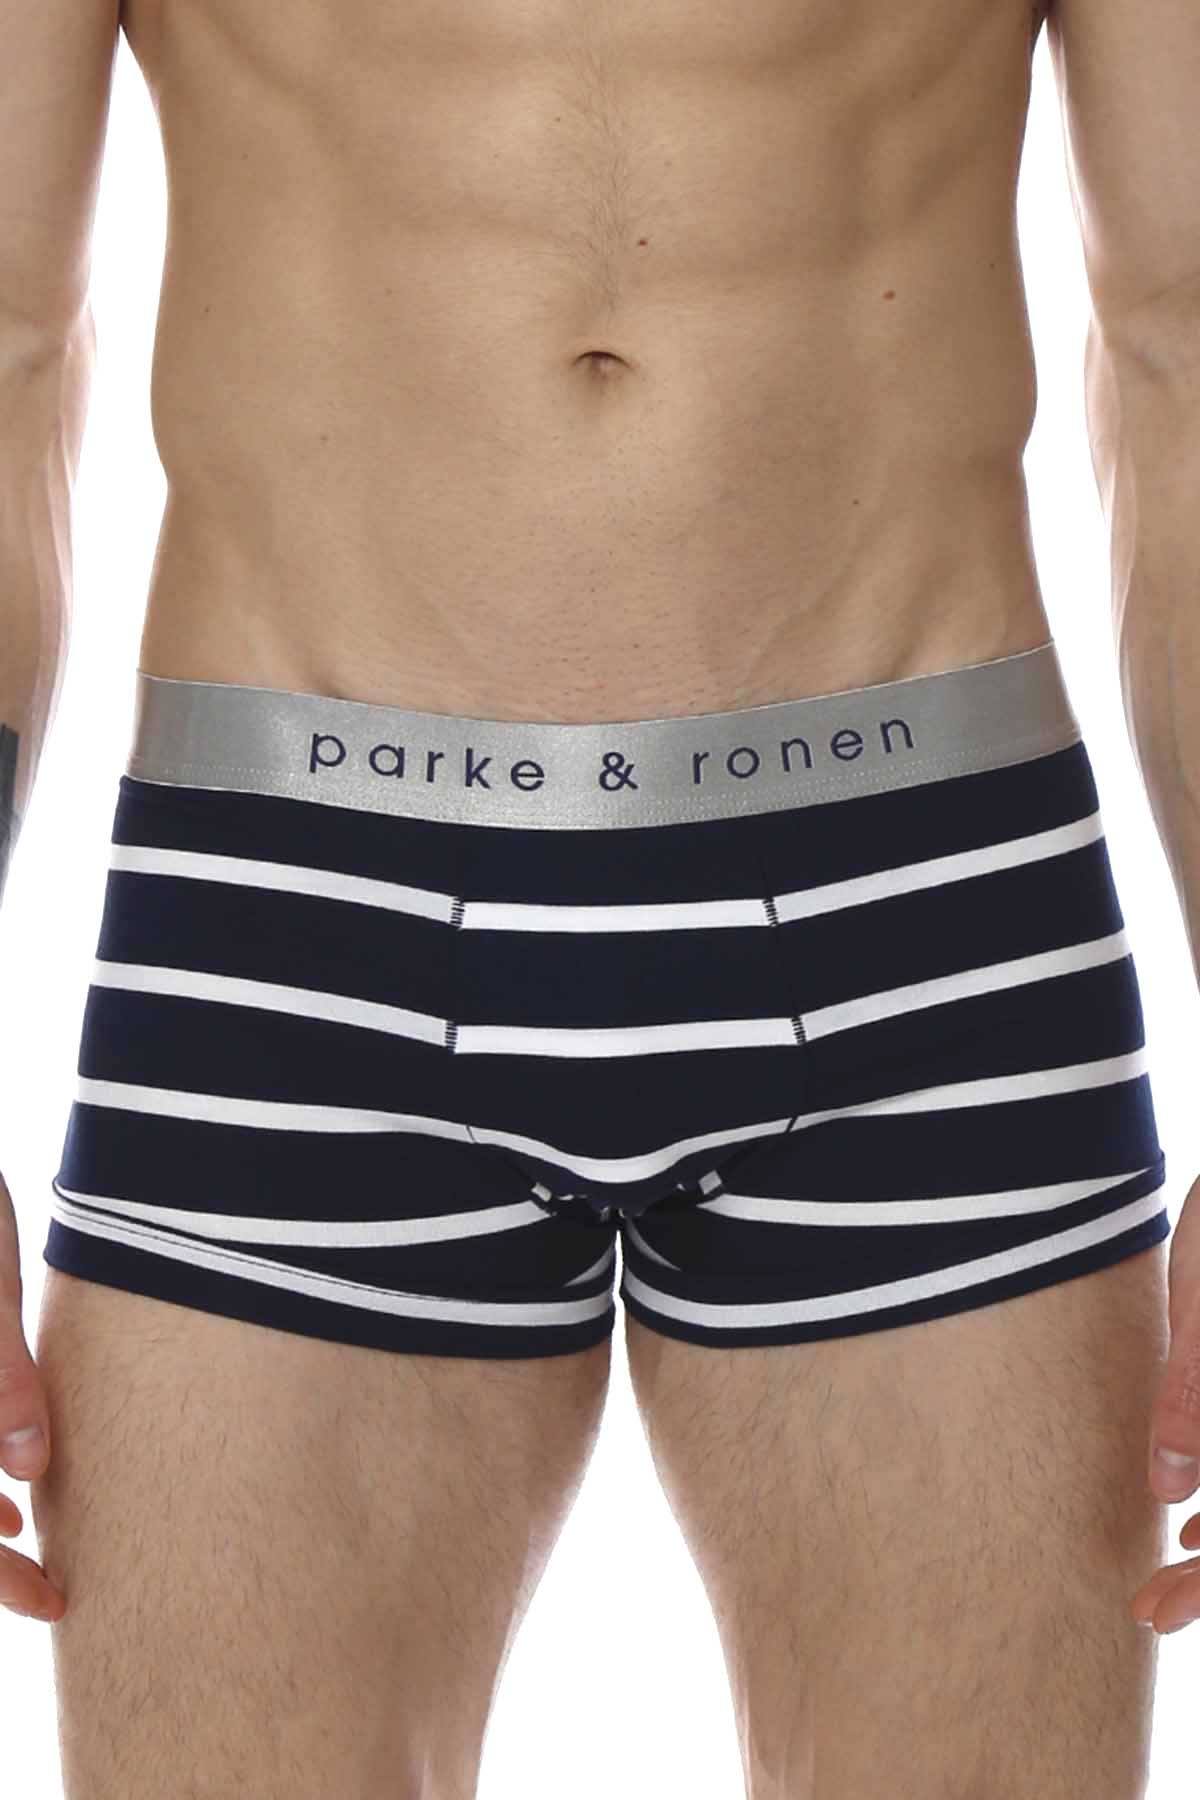 Parke & Ronen Navy/White Striped Low-Rise Trunk